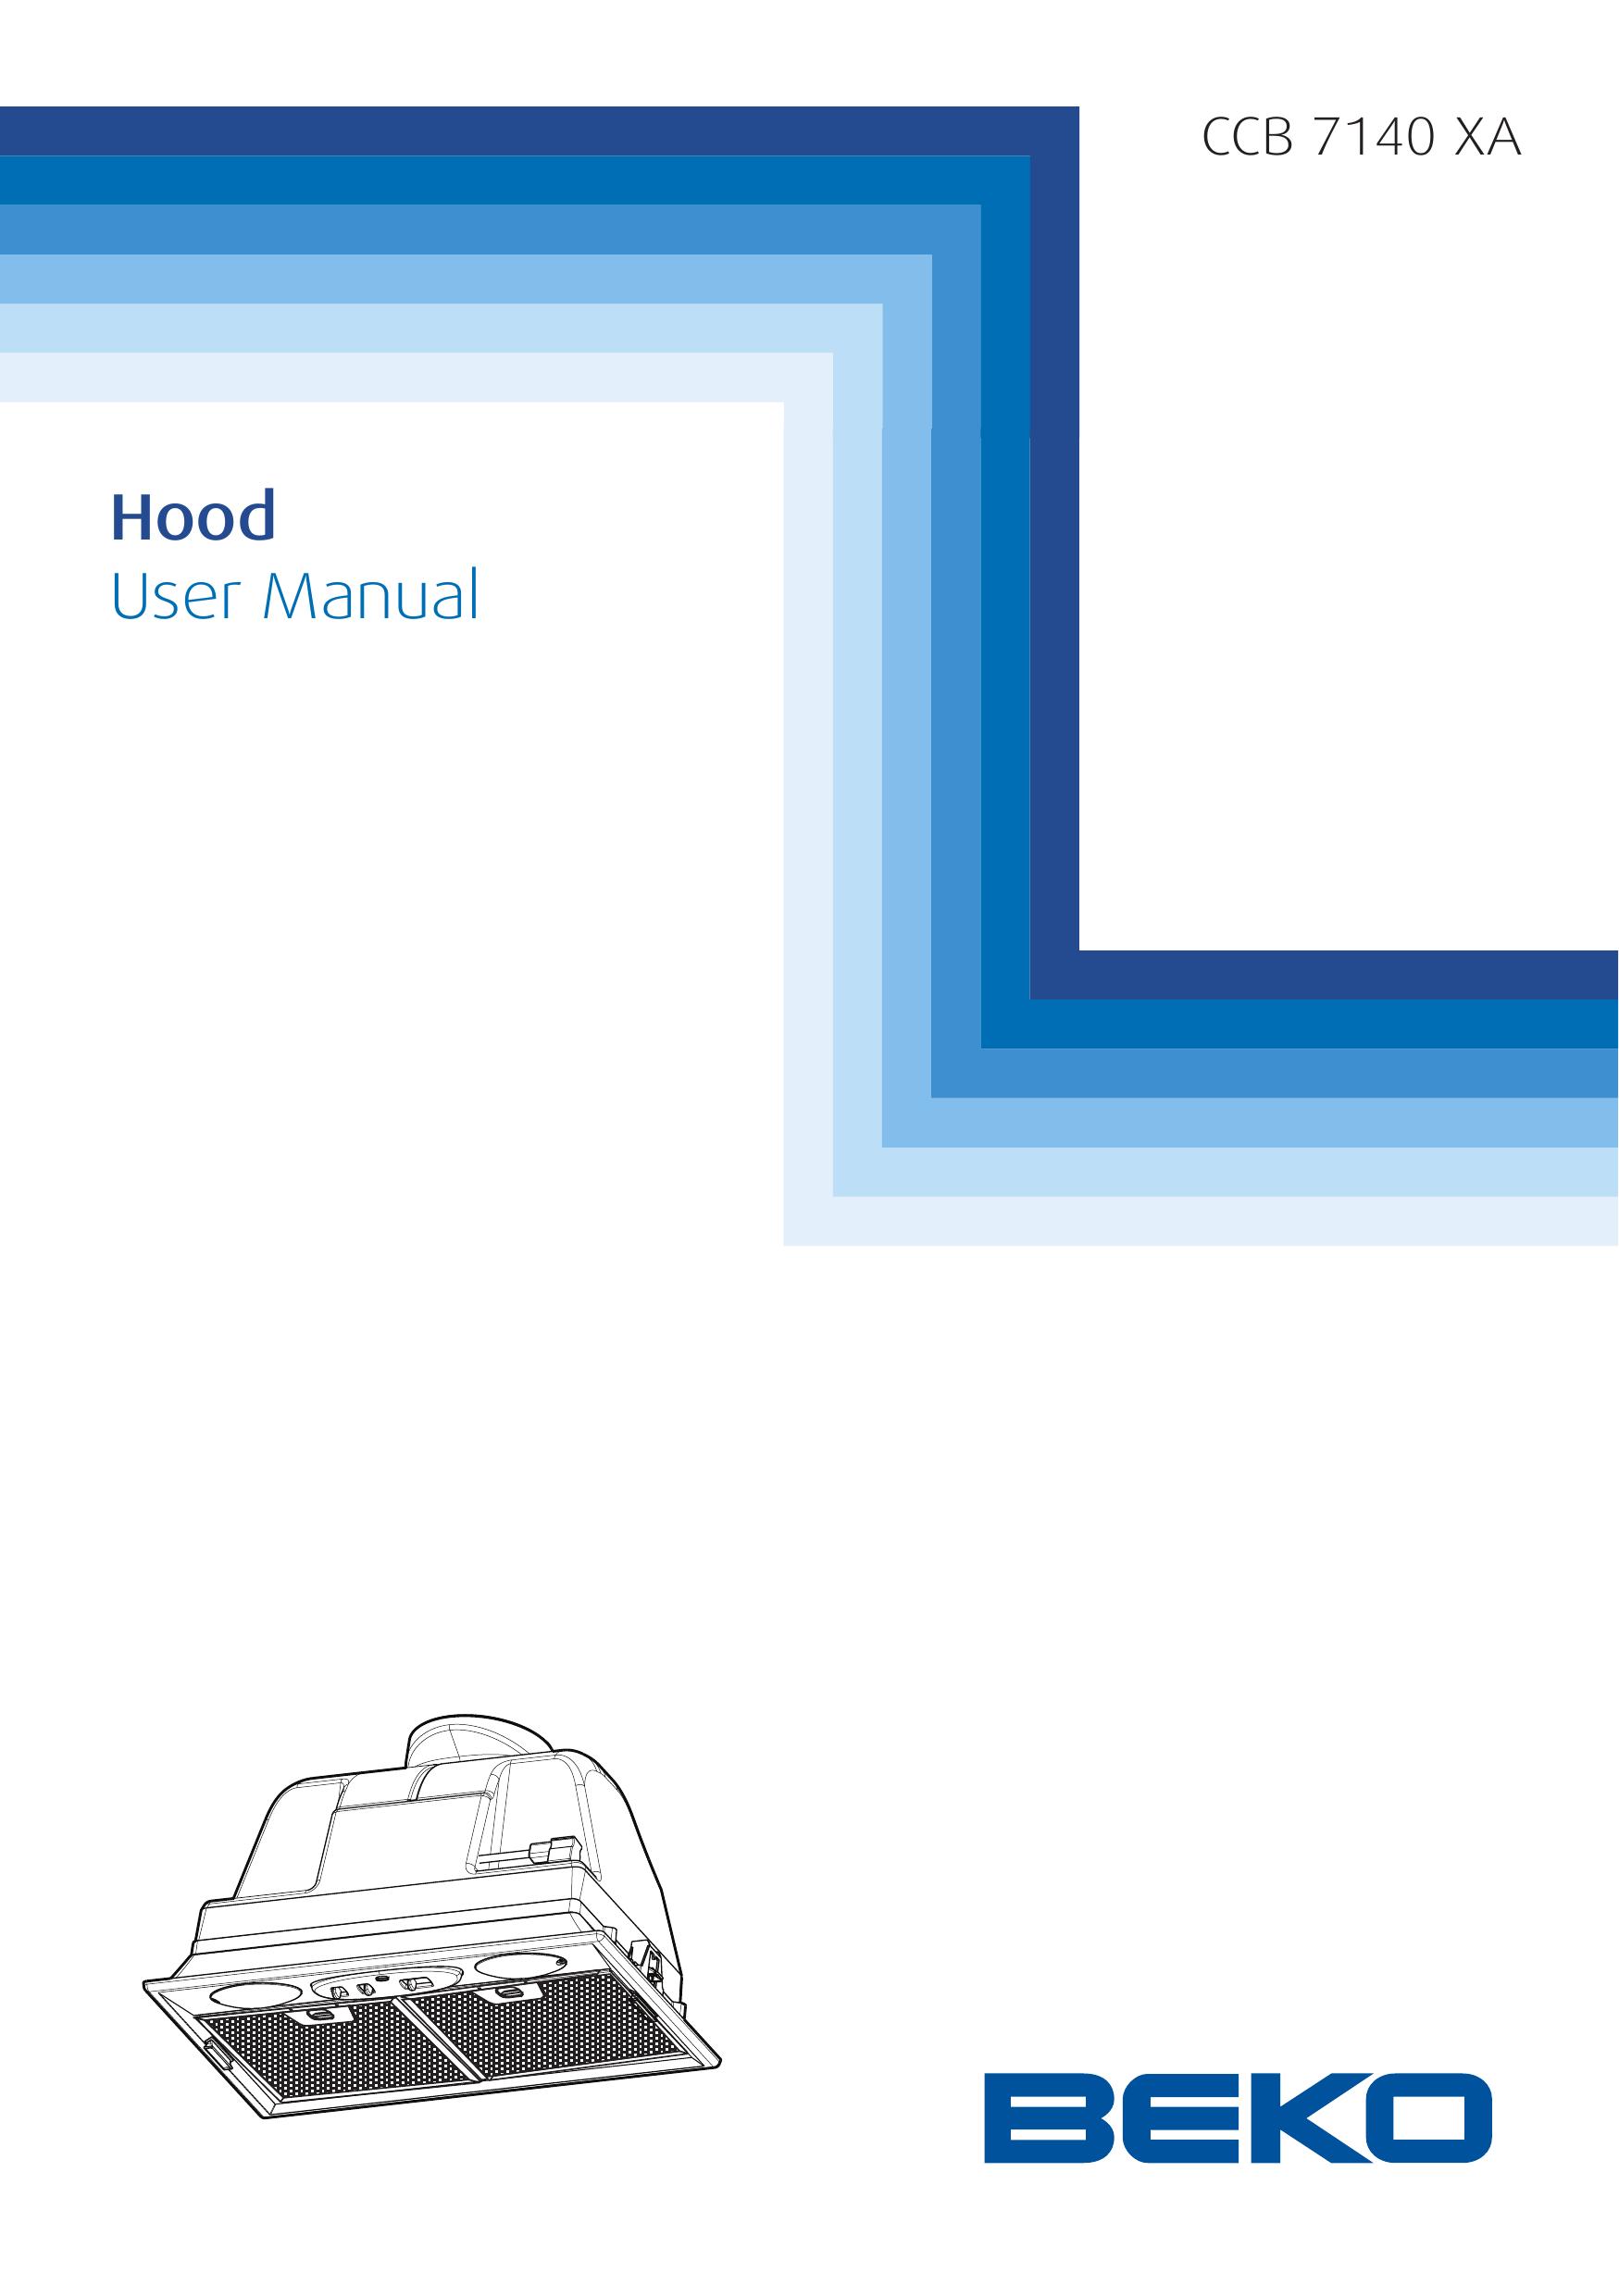 Beko CCB 7140 XA Ventilation Hood User Manual